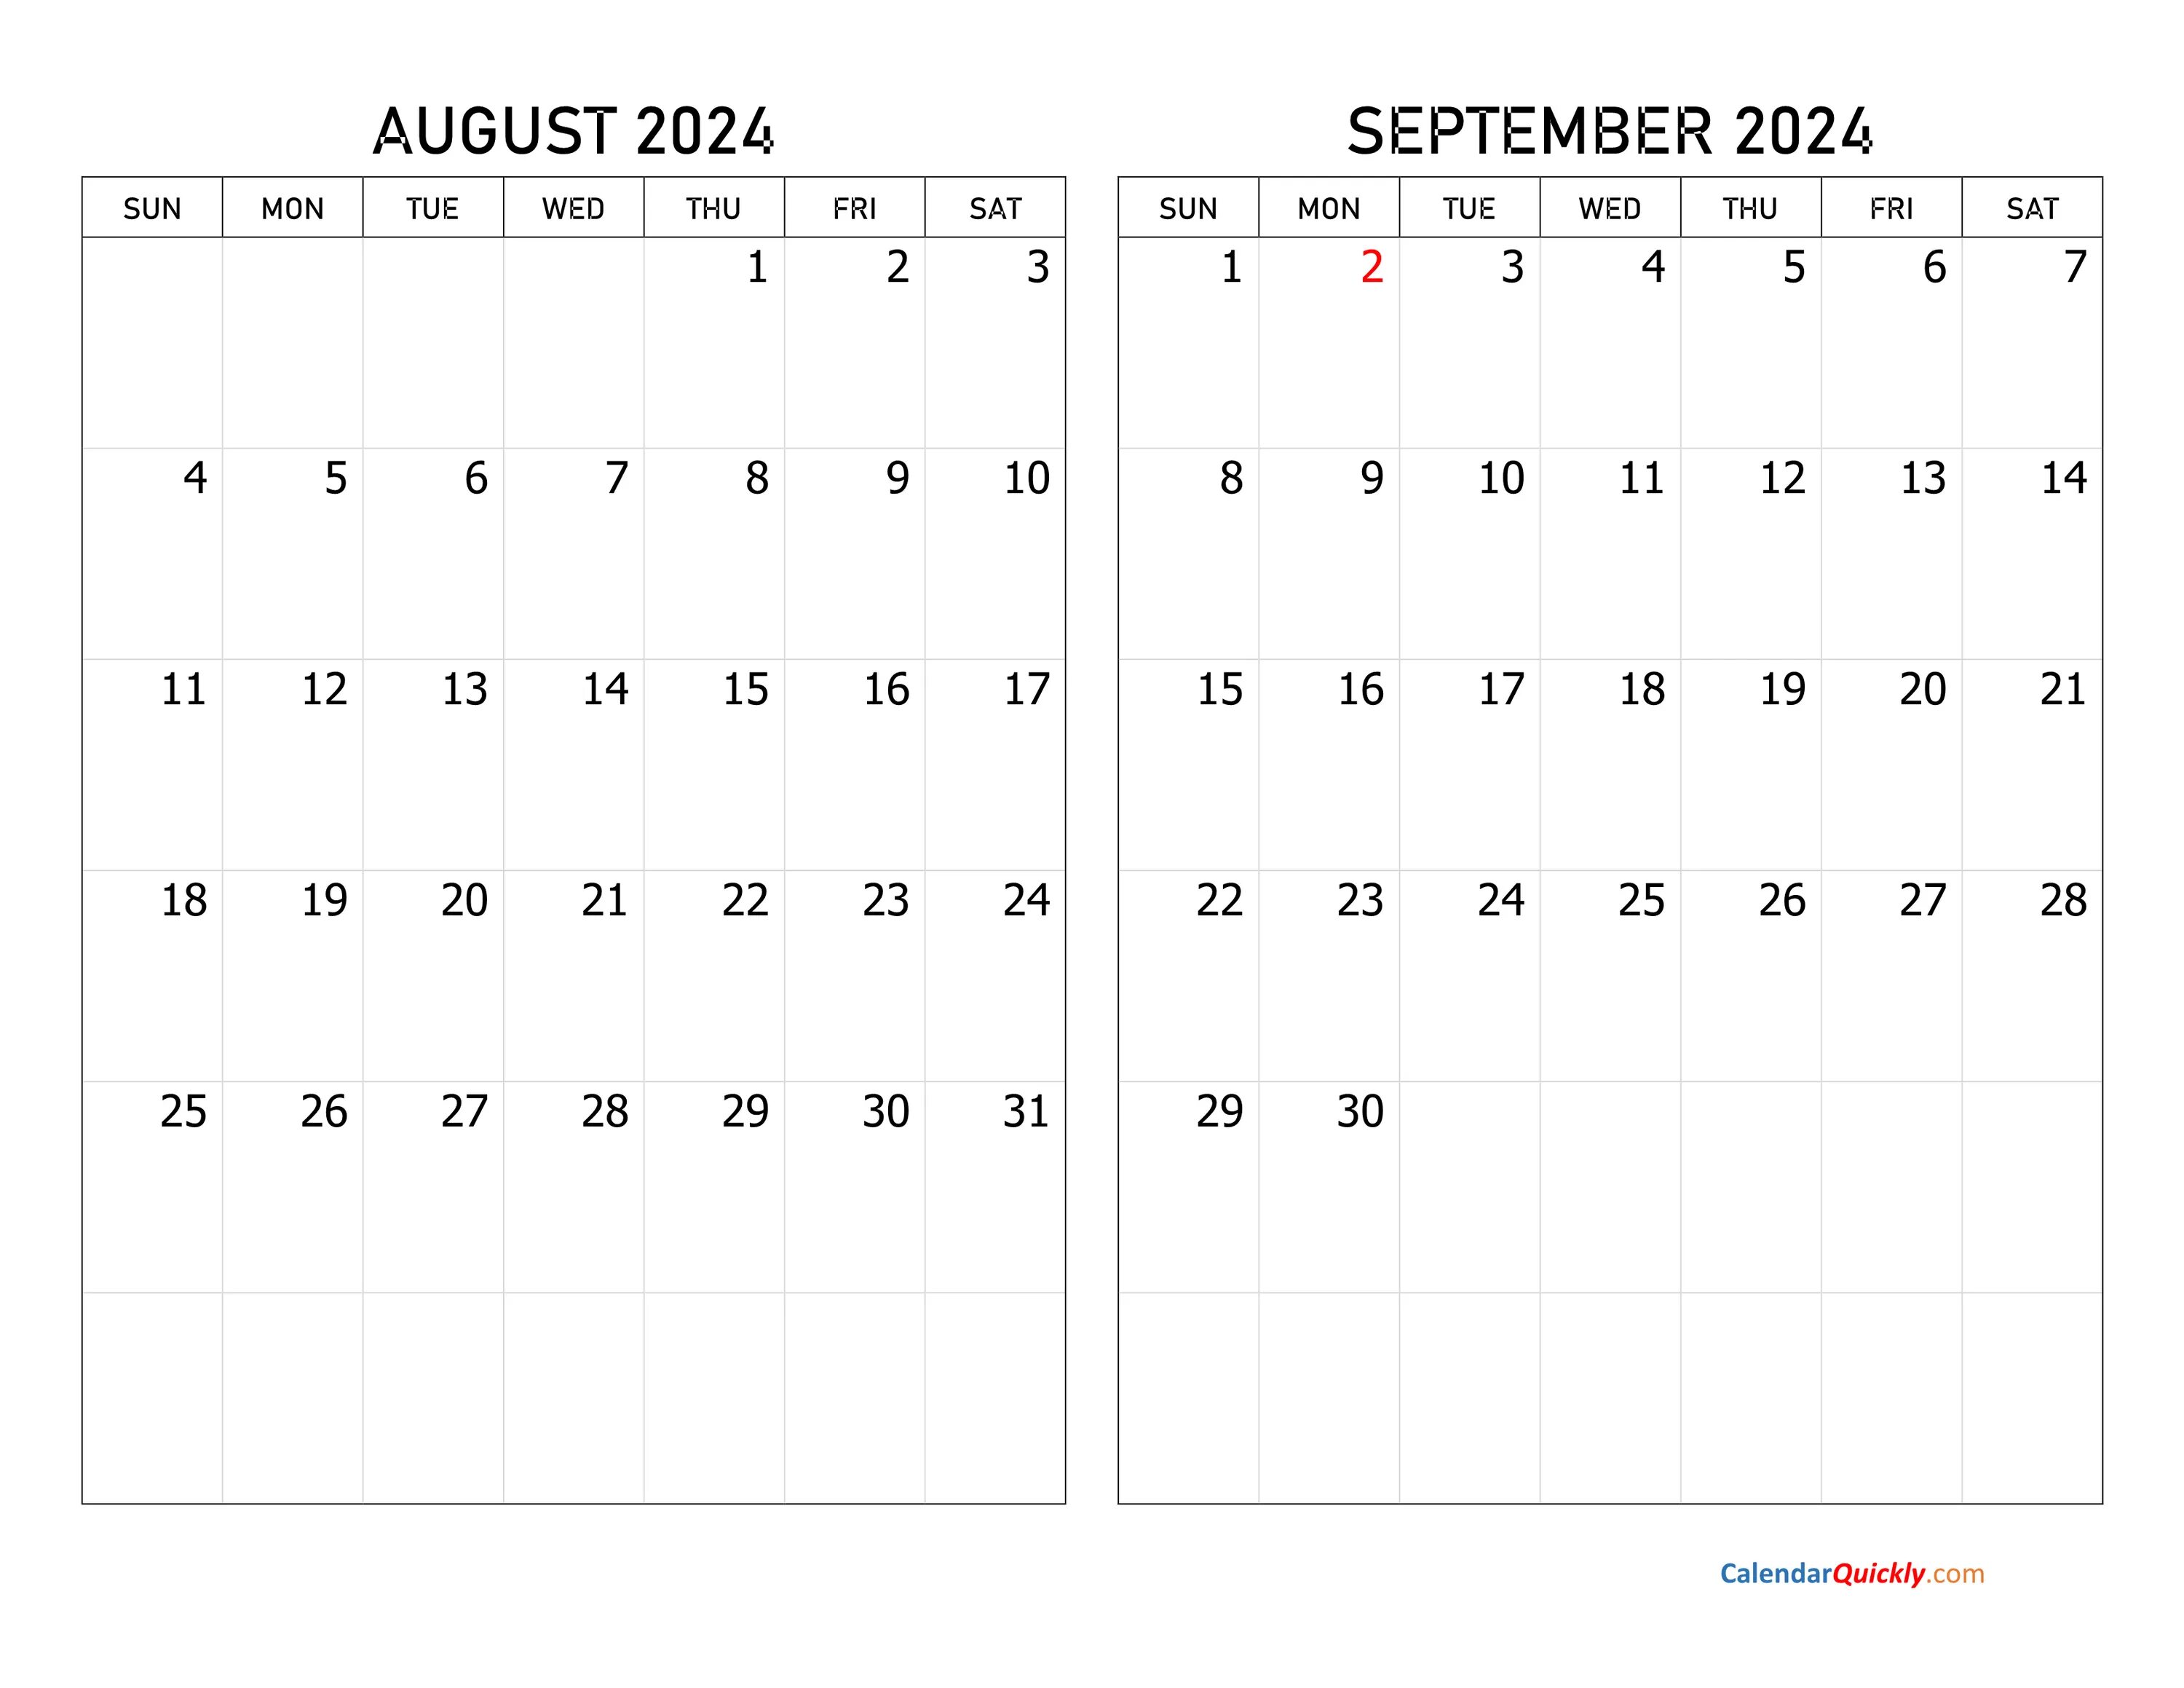 Календарь декабрь 2022. Календарь сентябрь октябрь 2022. Календарь октябрь ноябрь 2022. Календарь декабрь 2022 январь 2023. Какой будет январь февраль 2024 года